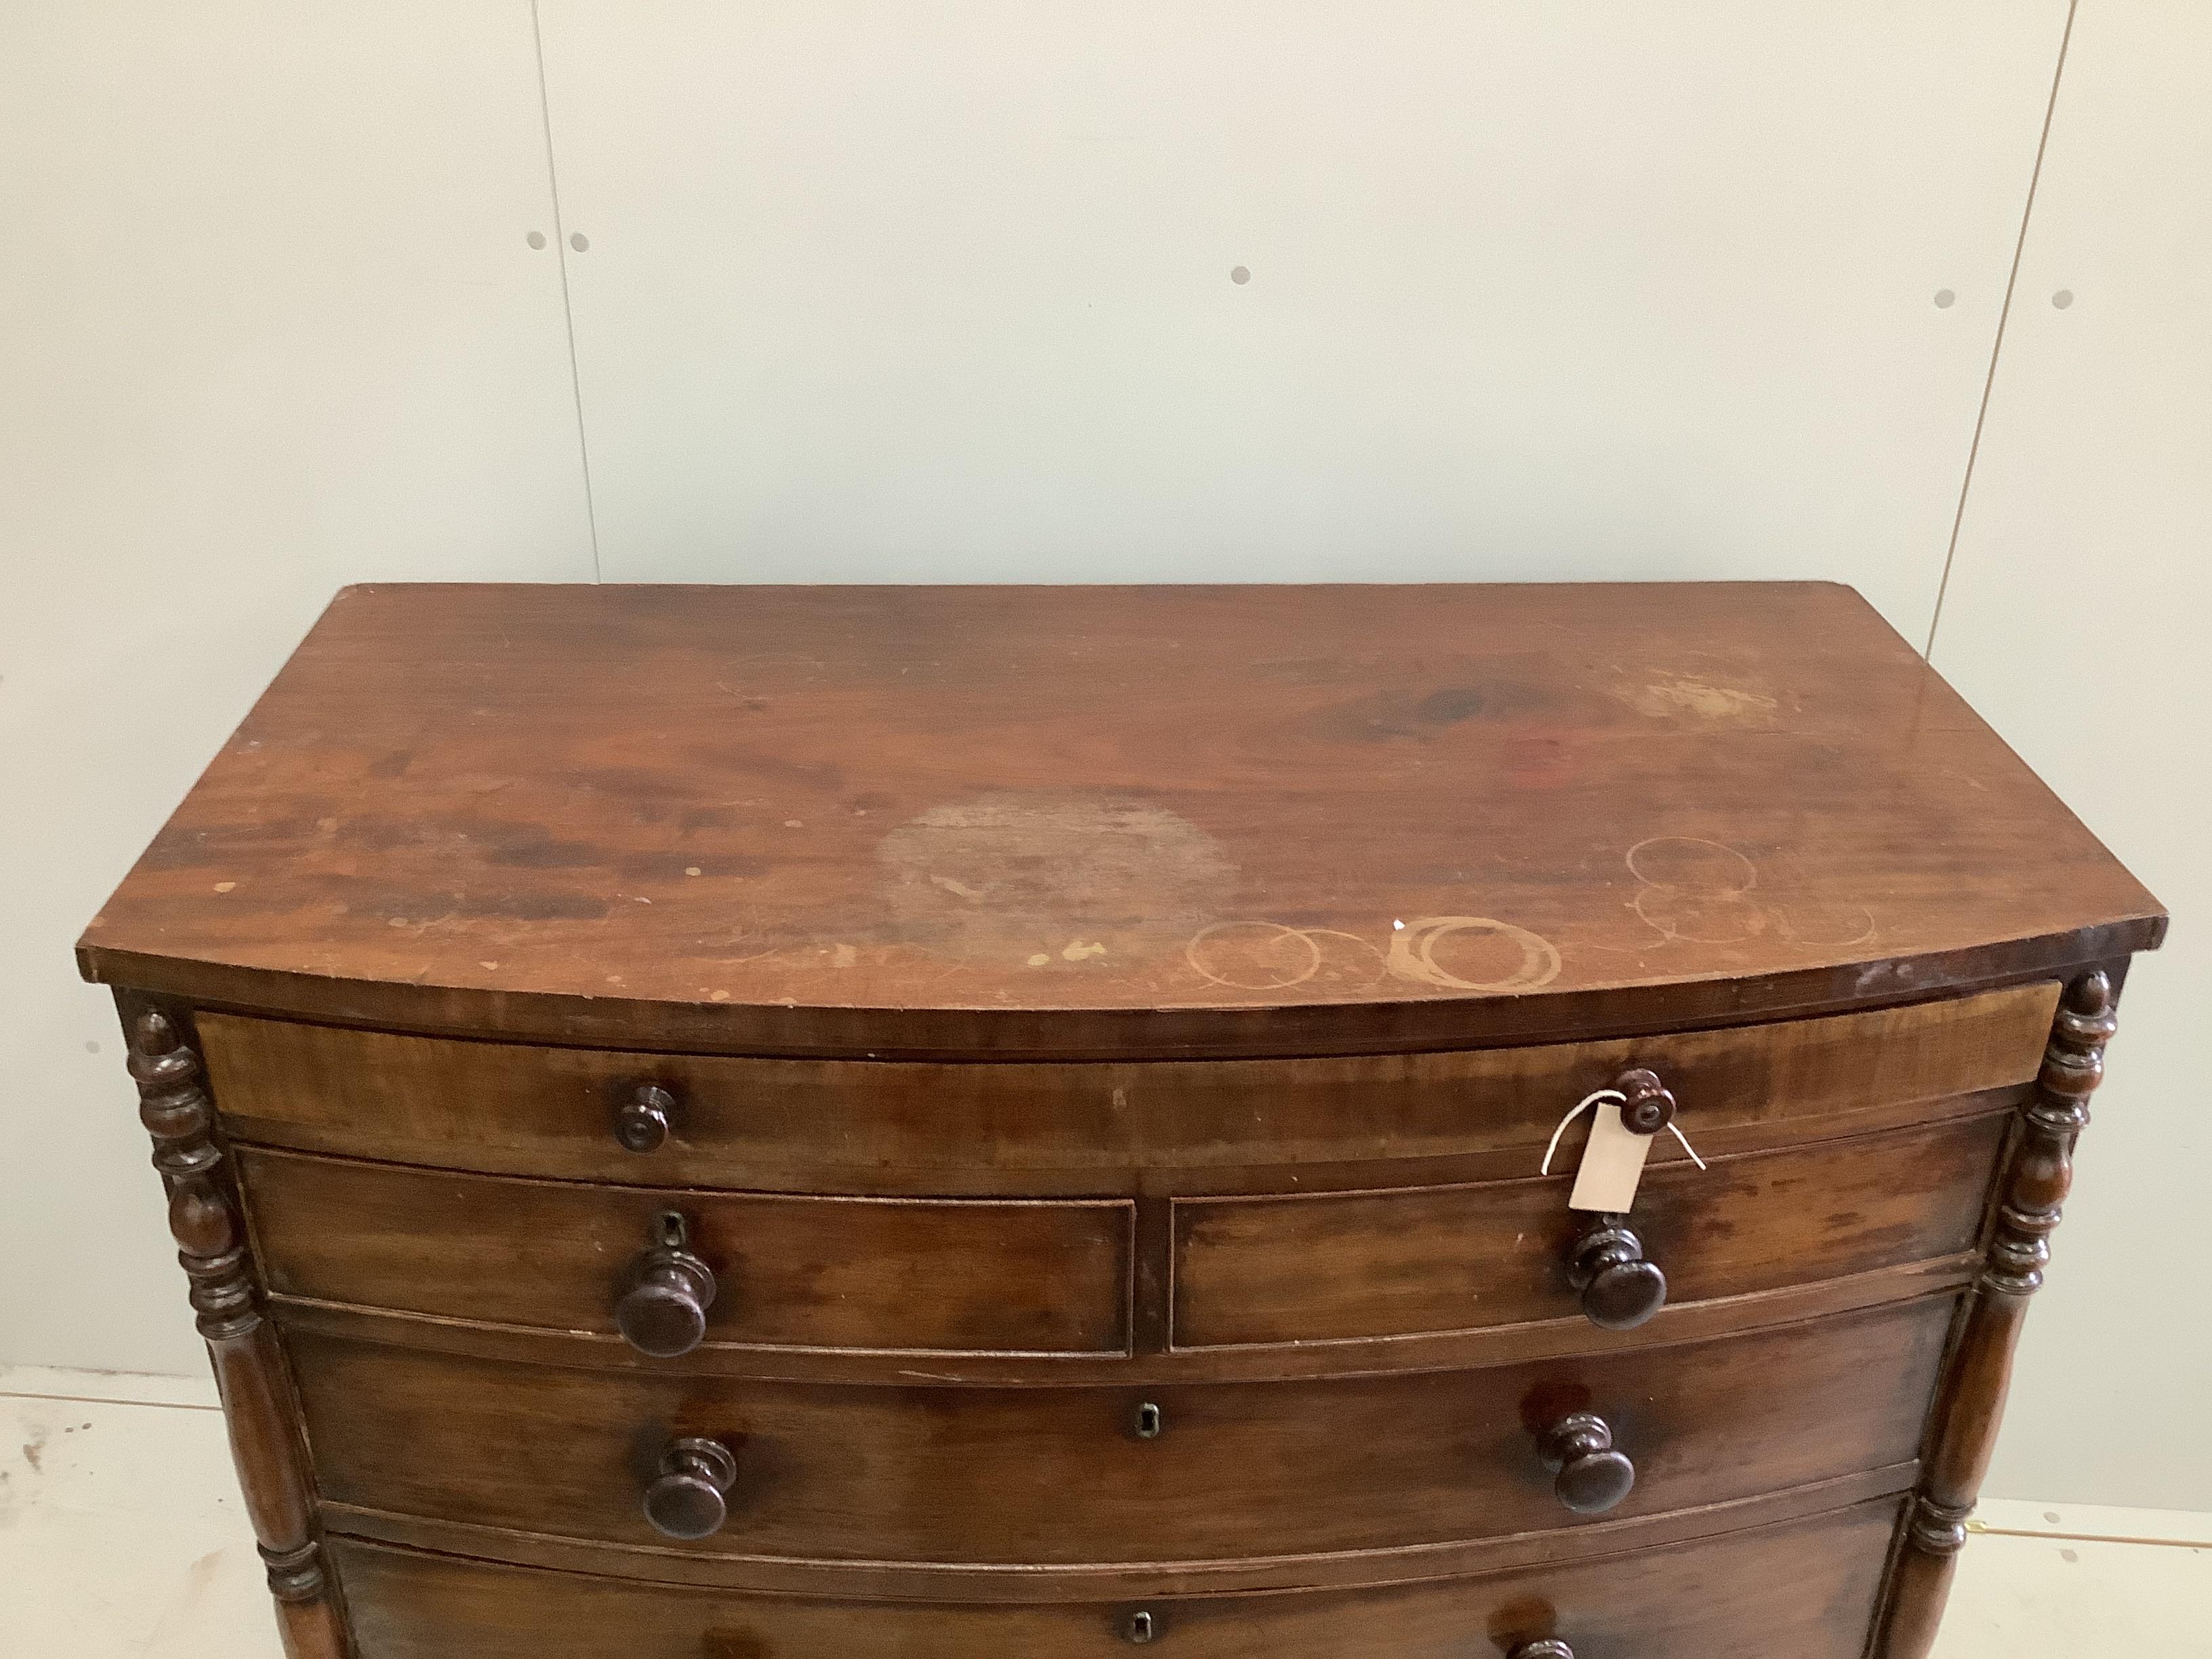 A Regency mahogany bowfront chest, width 120cm, depth 64cm, height 113cm